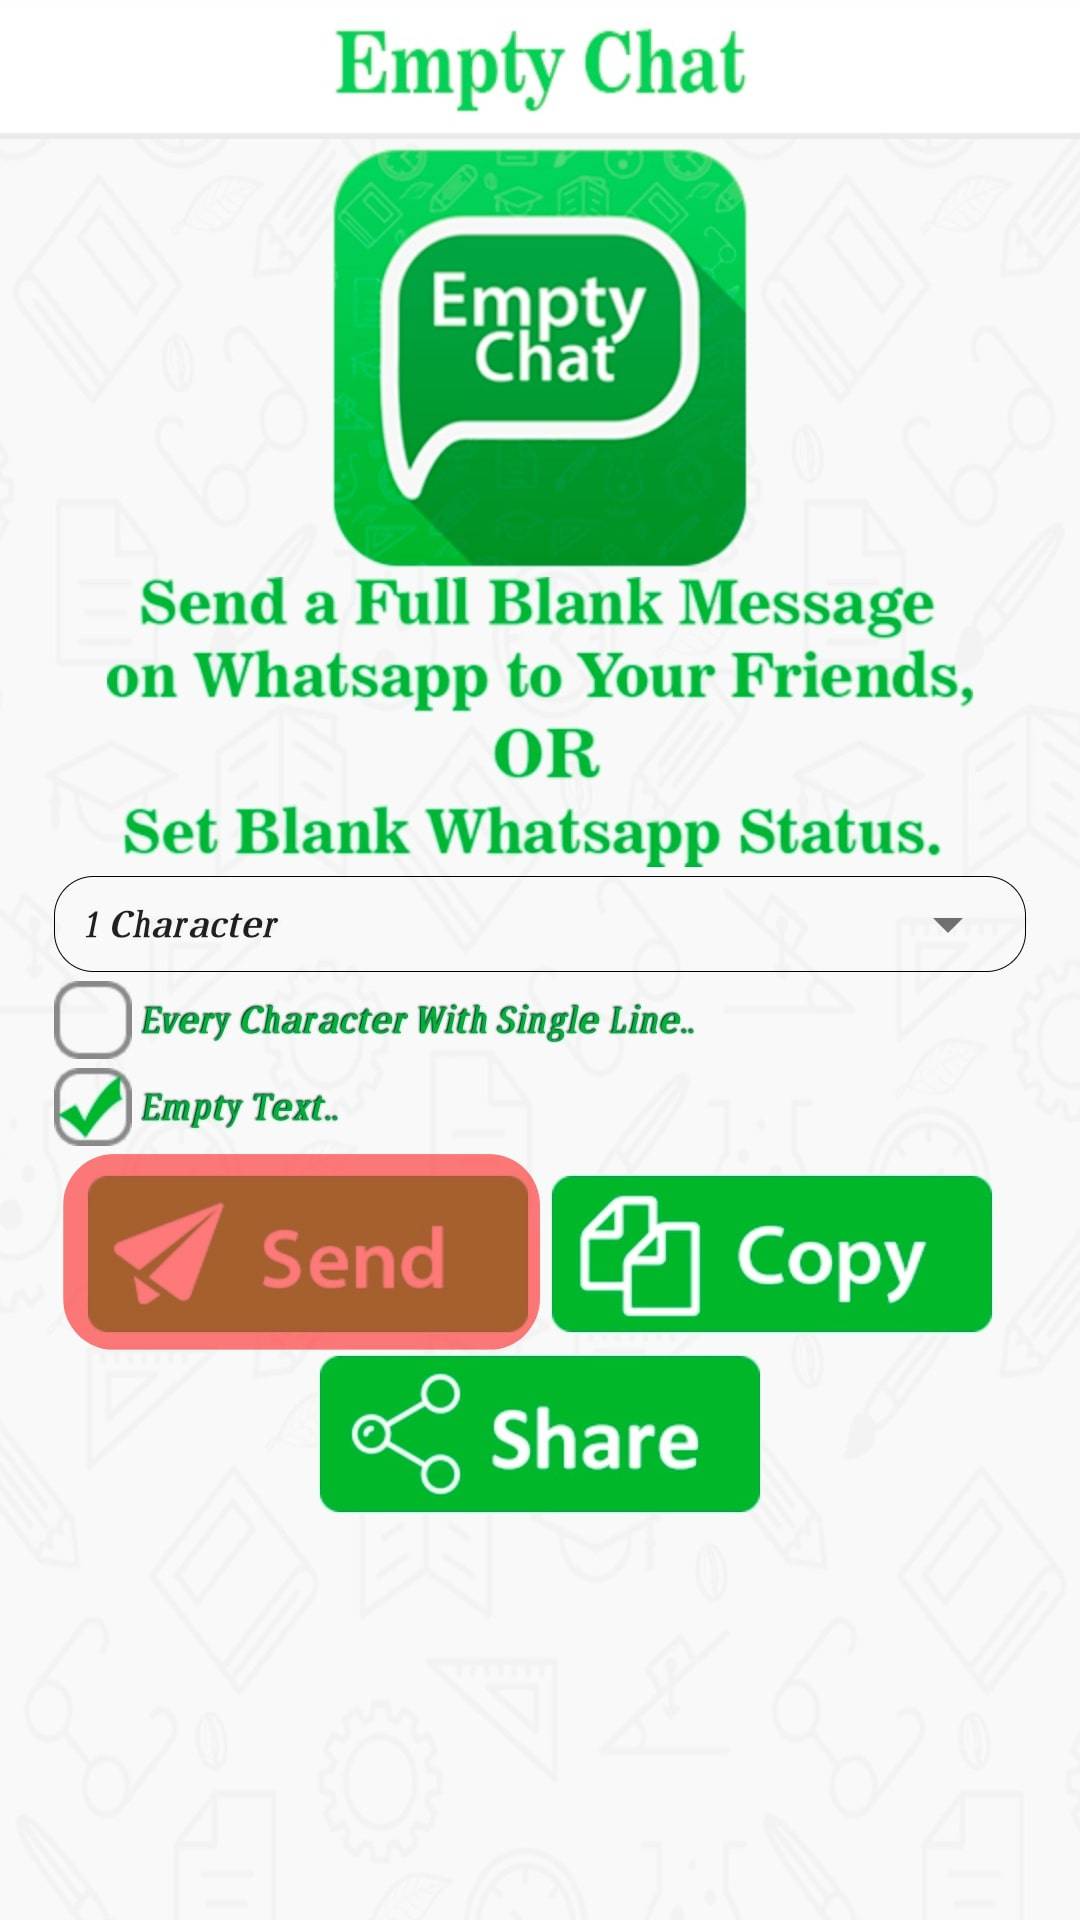 Empty Chat Send Button